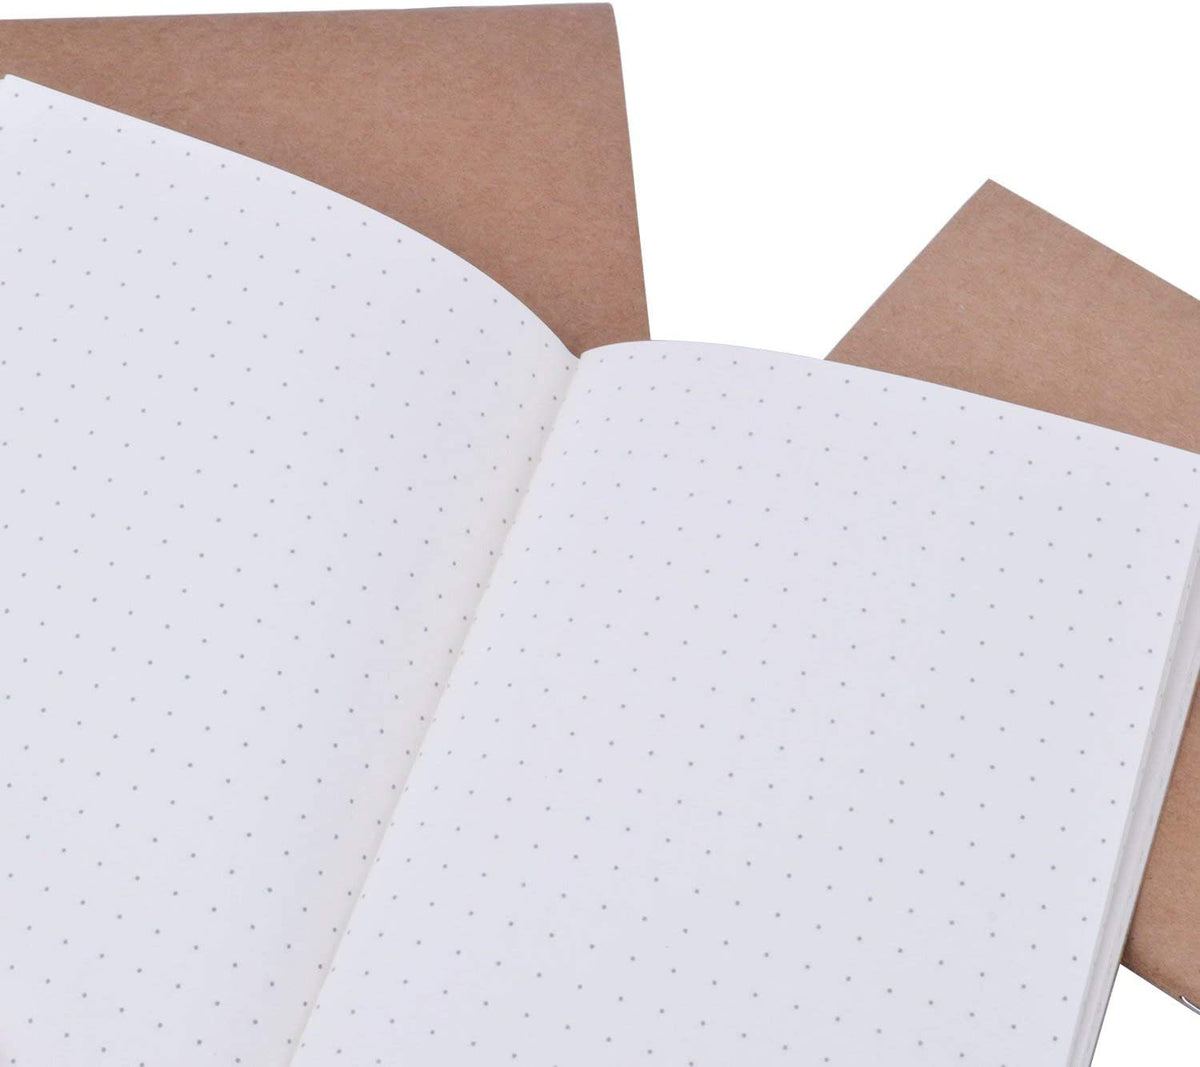 Plain Paper Notebook - Blank Journal for Creative Minds | Corkor - A4